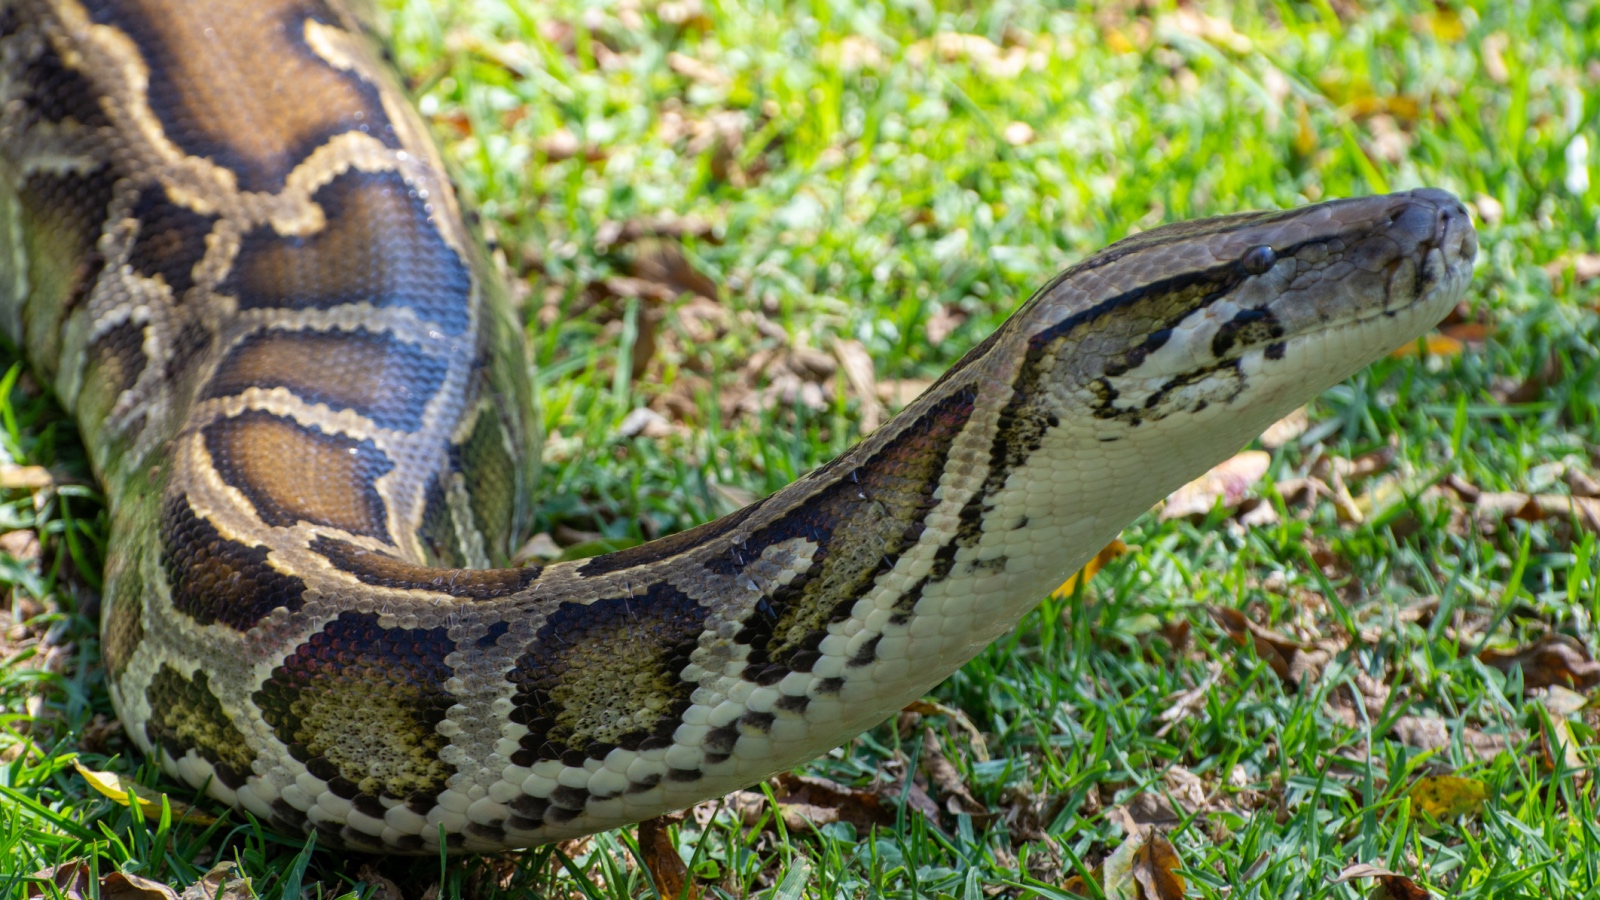 Burmese python in Florida